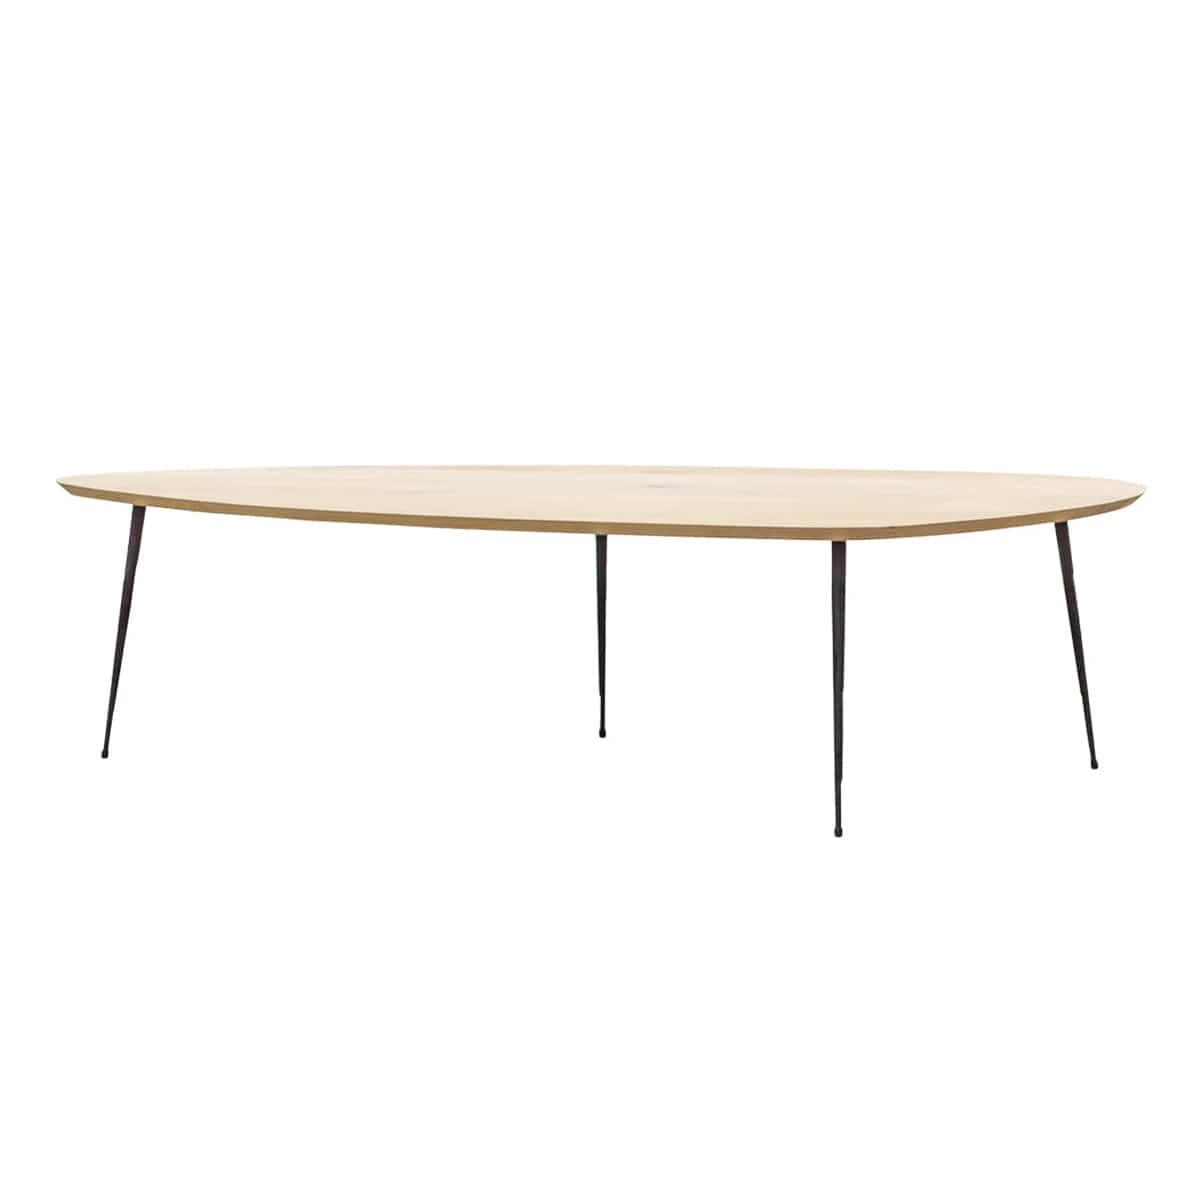 ETHNICRAFT Oak Pebble Coffee Table - Hesse오크 페블 커피 테이블 (헤쎄 - 대)DESIGNED  BY BELGIUM